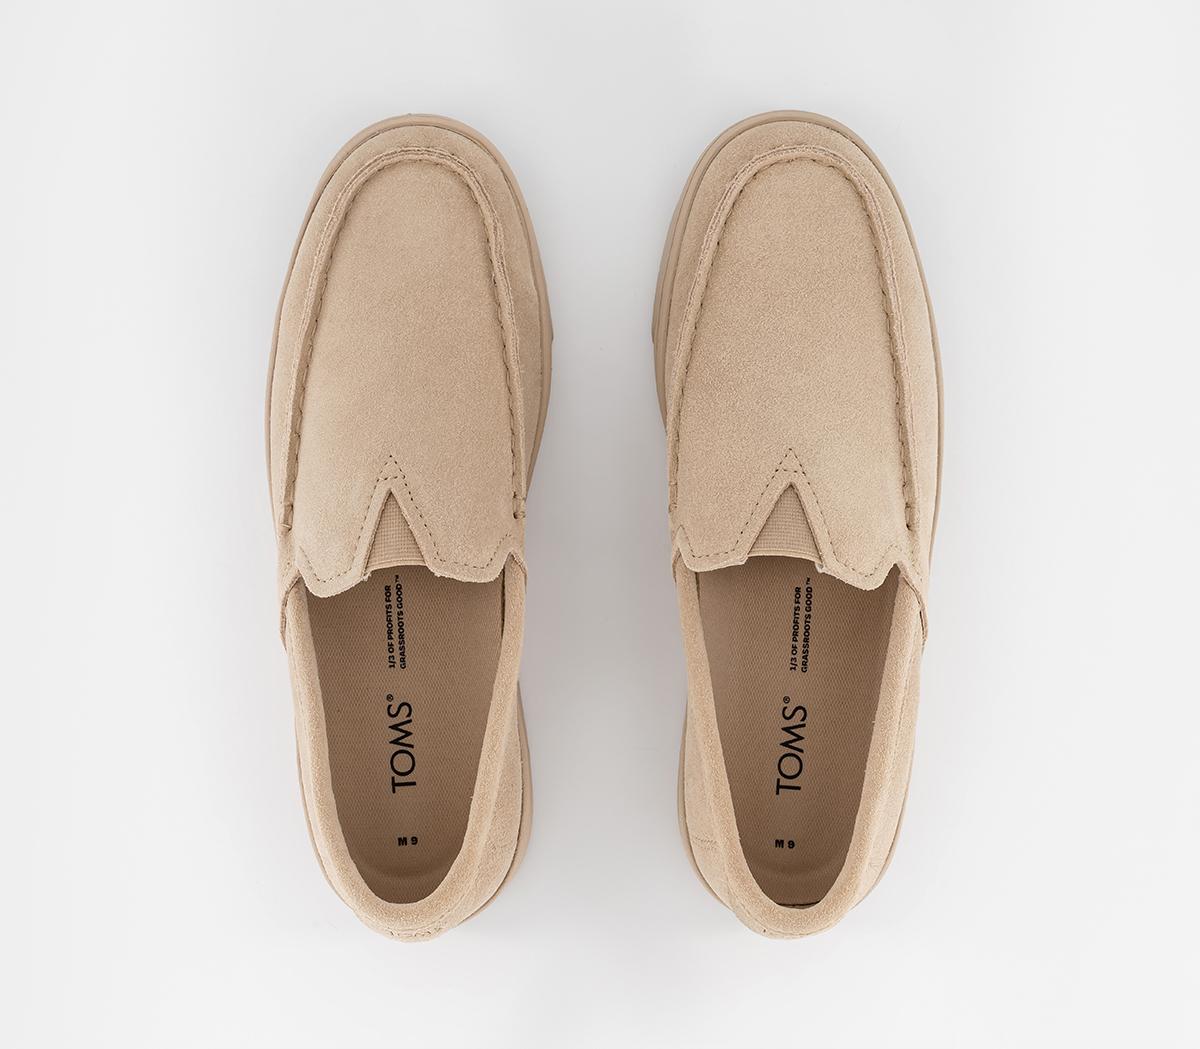 TOMS Trvl Lite Loafers Oatmeal Suede - Men’s Smart Shoes